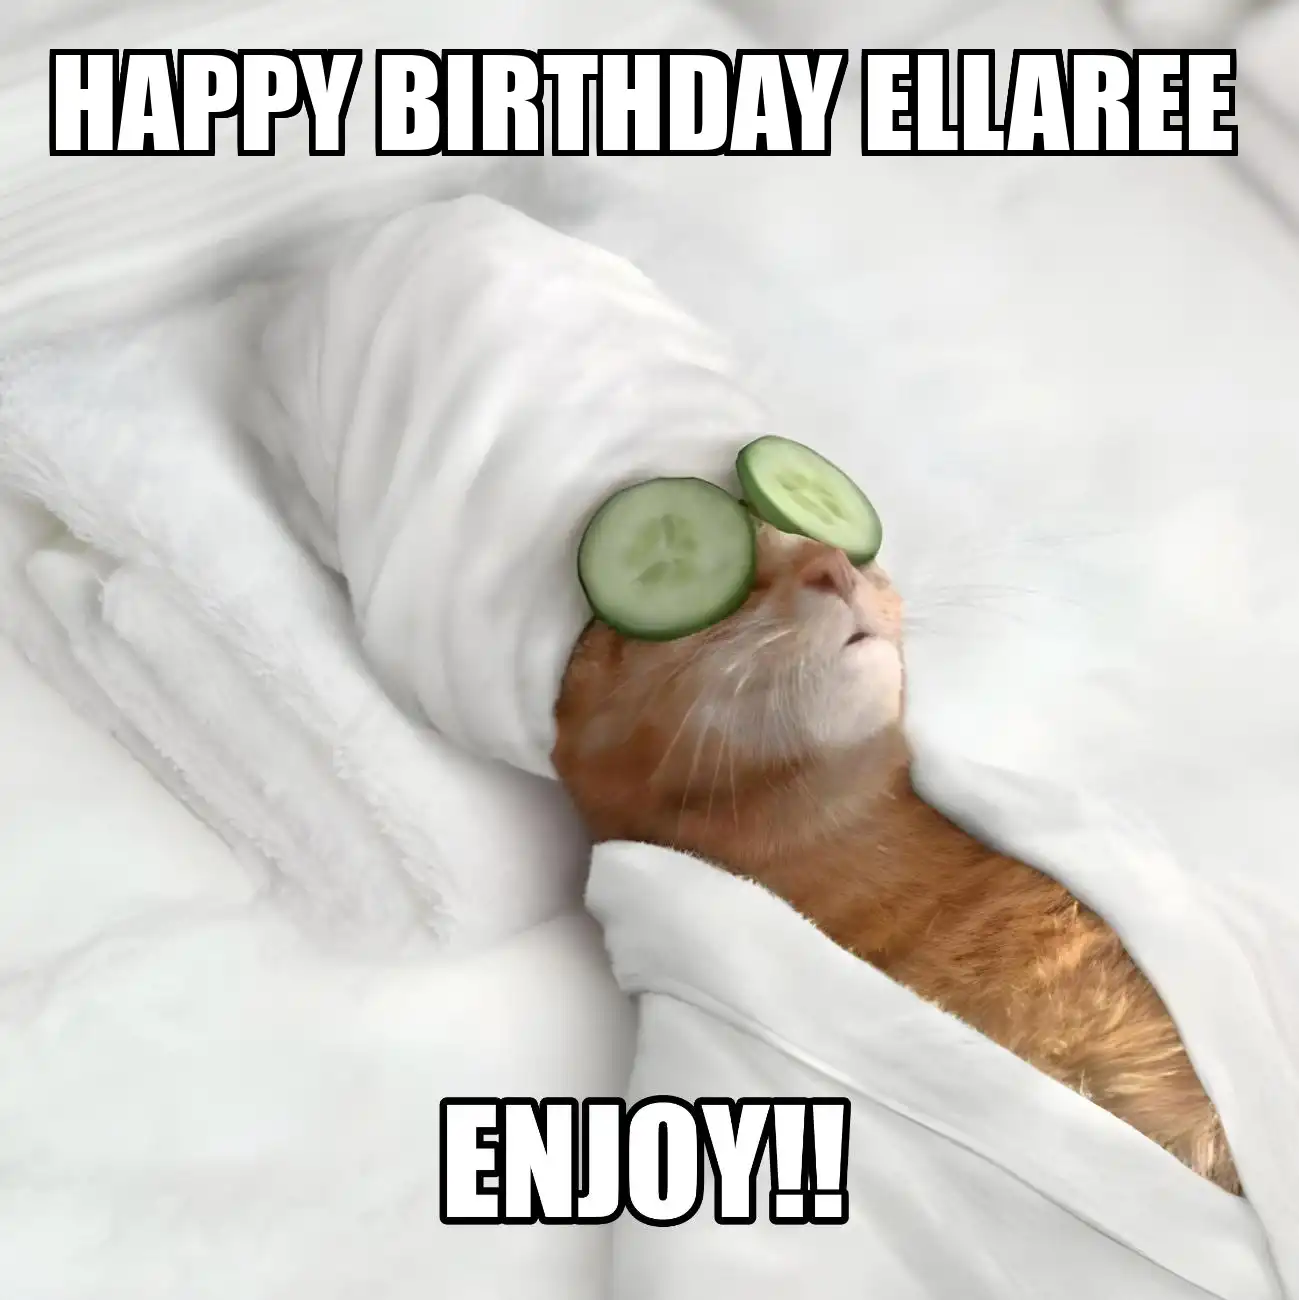 Happy Birthday Ellaree Enjoy Cat Meme